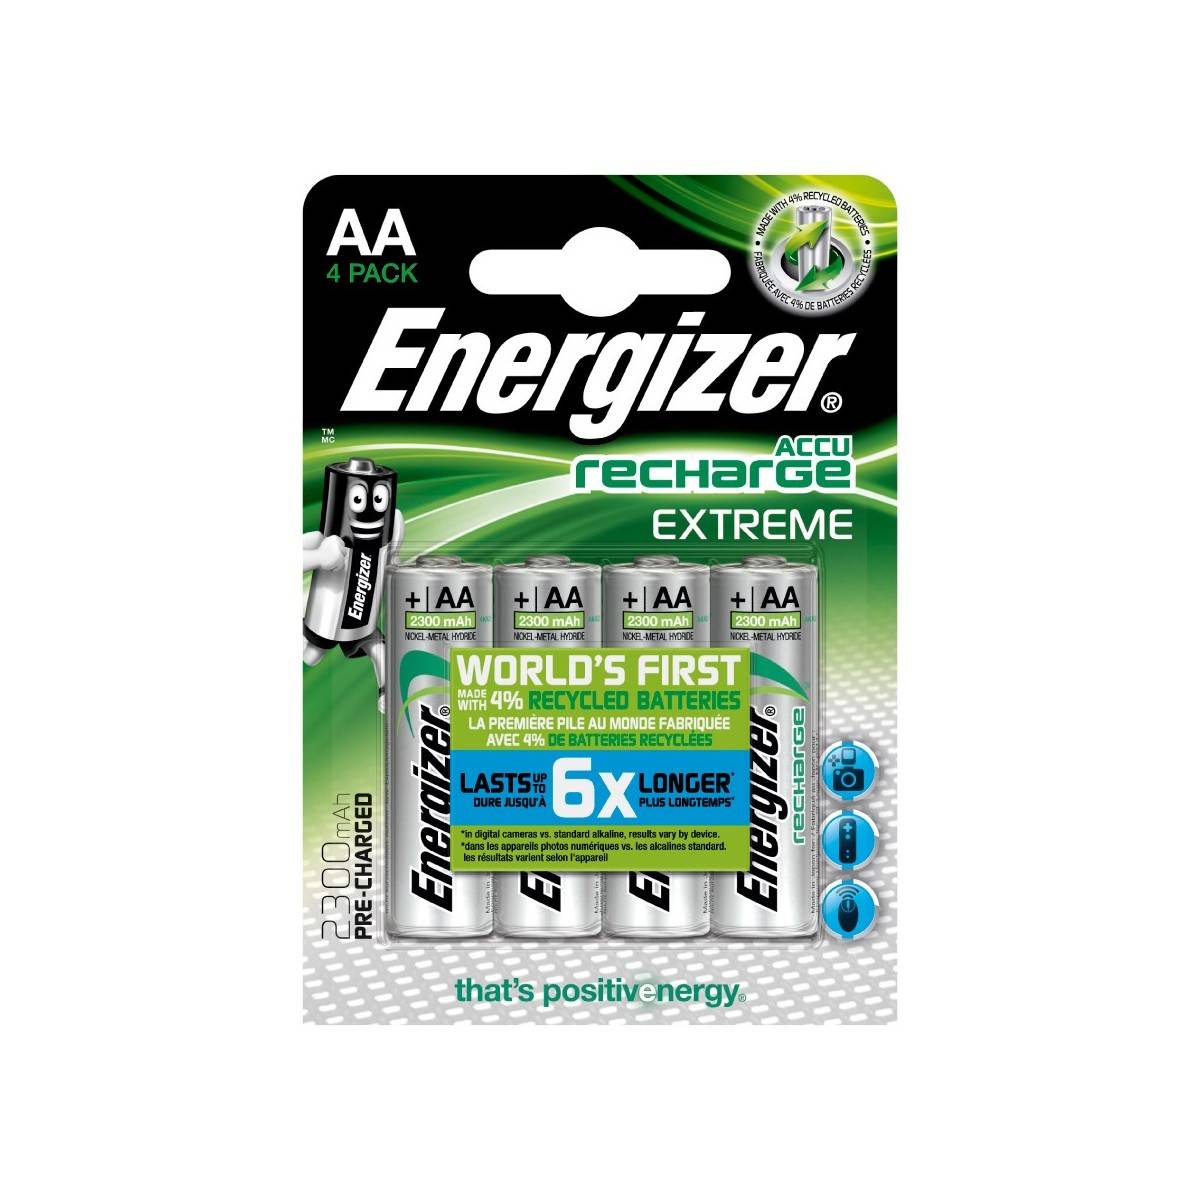 Batteria ricaricabile Energizer Extreme 2300mAh HR6 (AA) Blister da 4 pezzi.